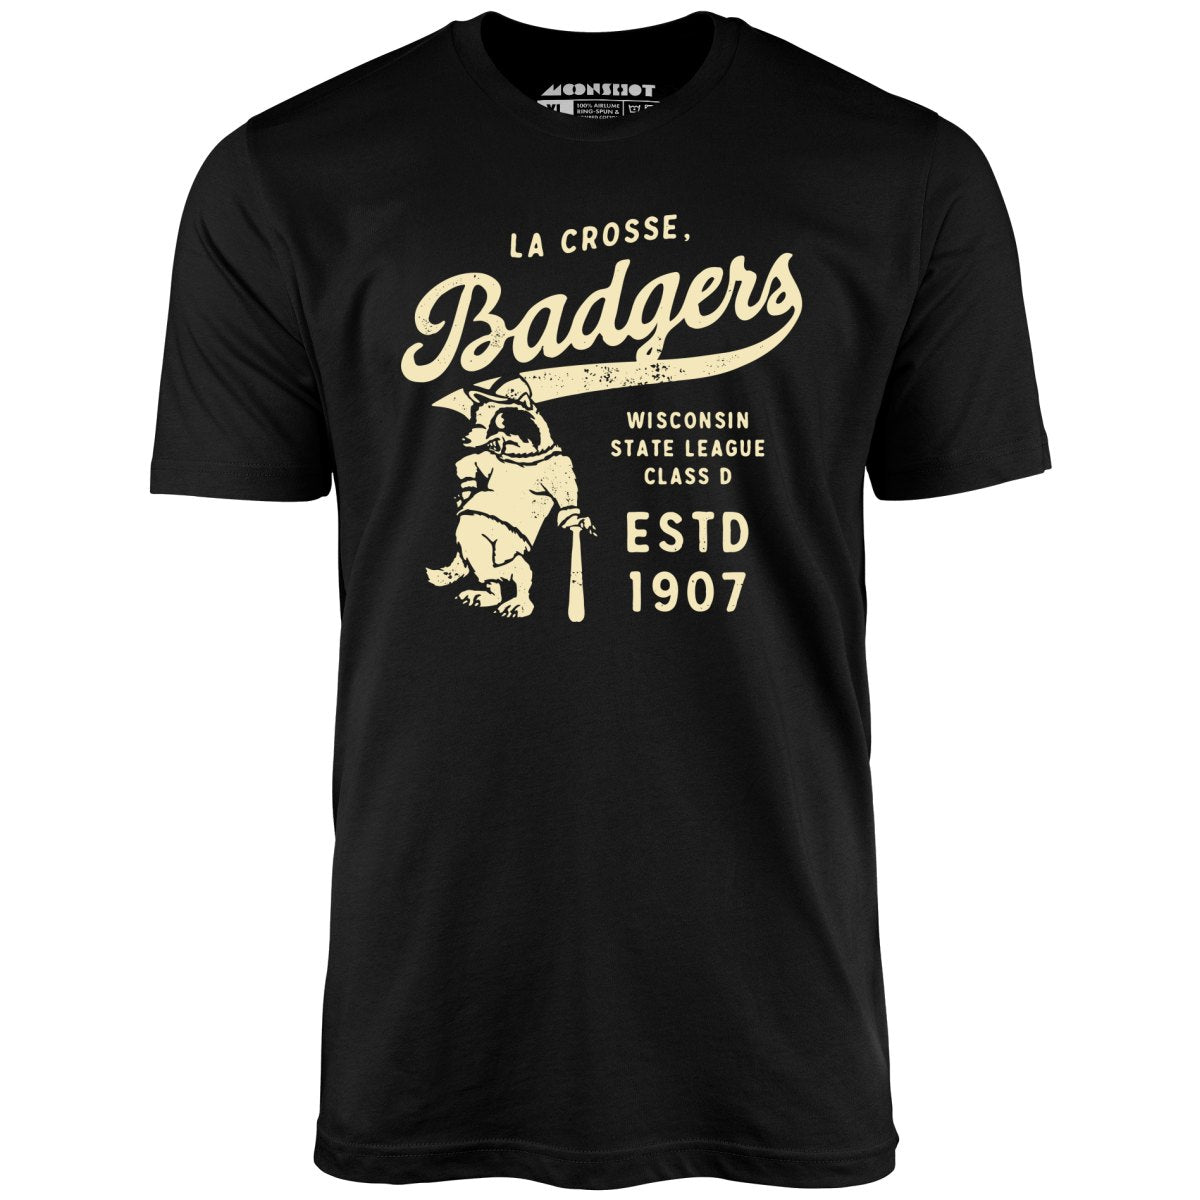 La Crosse Badgers - Wisconsin - Vintage Defunct Baseball Teams - Unisex T-Shirt